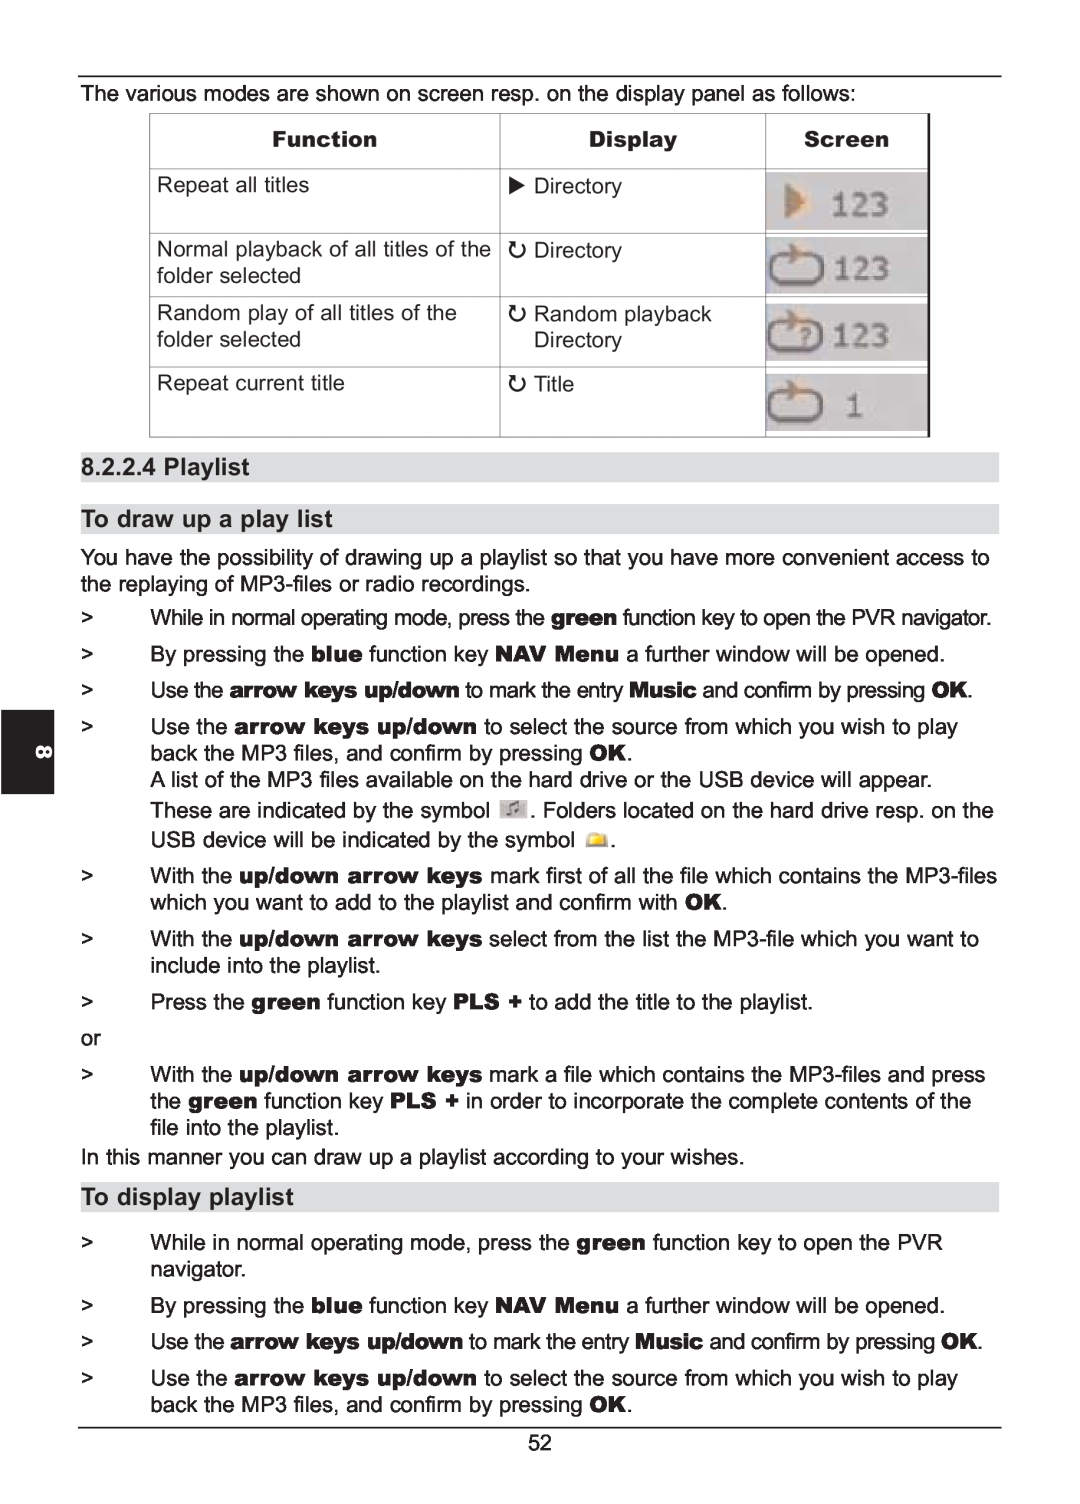 TechniSat HD S2X manual Playlist To draw up a play list, To display playlist, Function, Display, Screen 